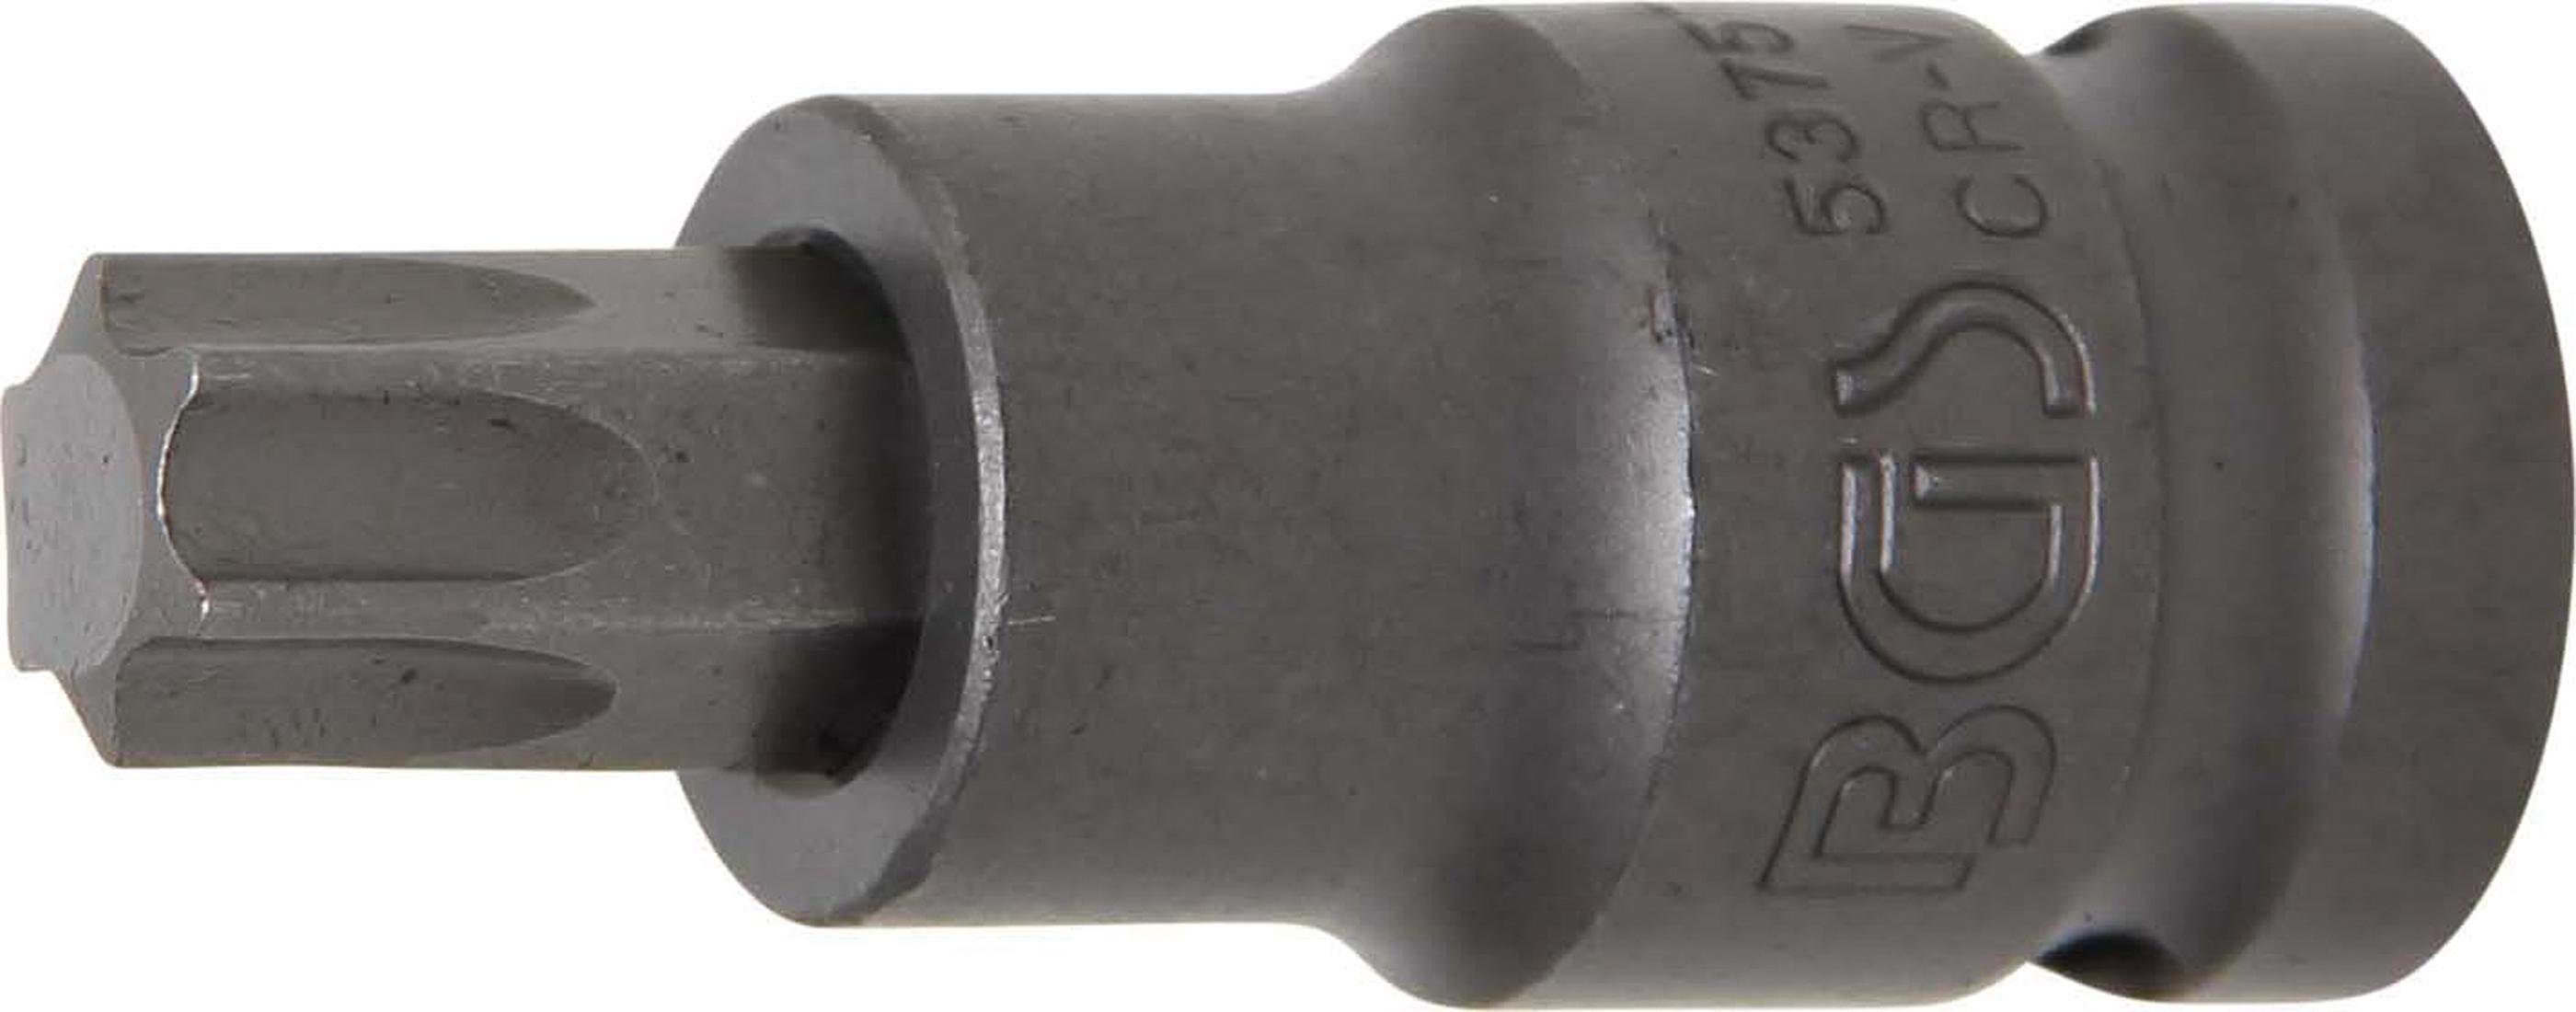 BGS technic Bit-Schraubendreher Kraft-Bit-Einsatz, Antrieb Innenvierkant 12,5 mm (1/2), T-Profil (für Torx) T55